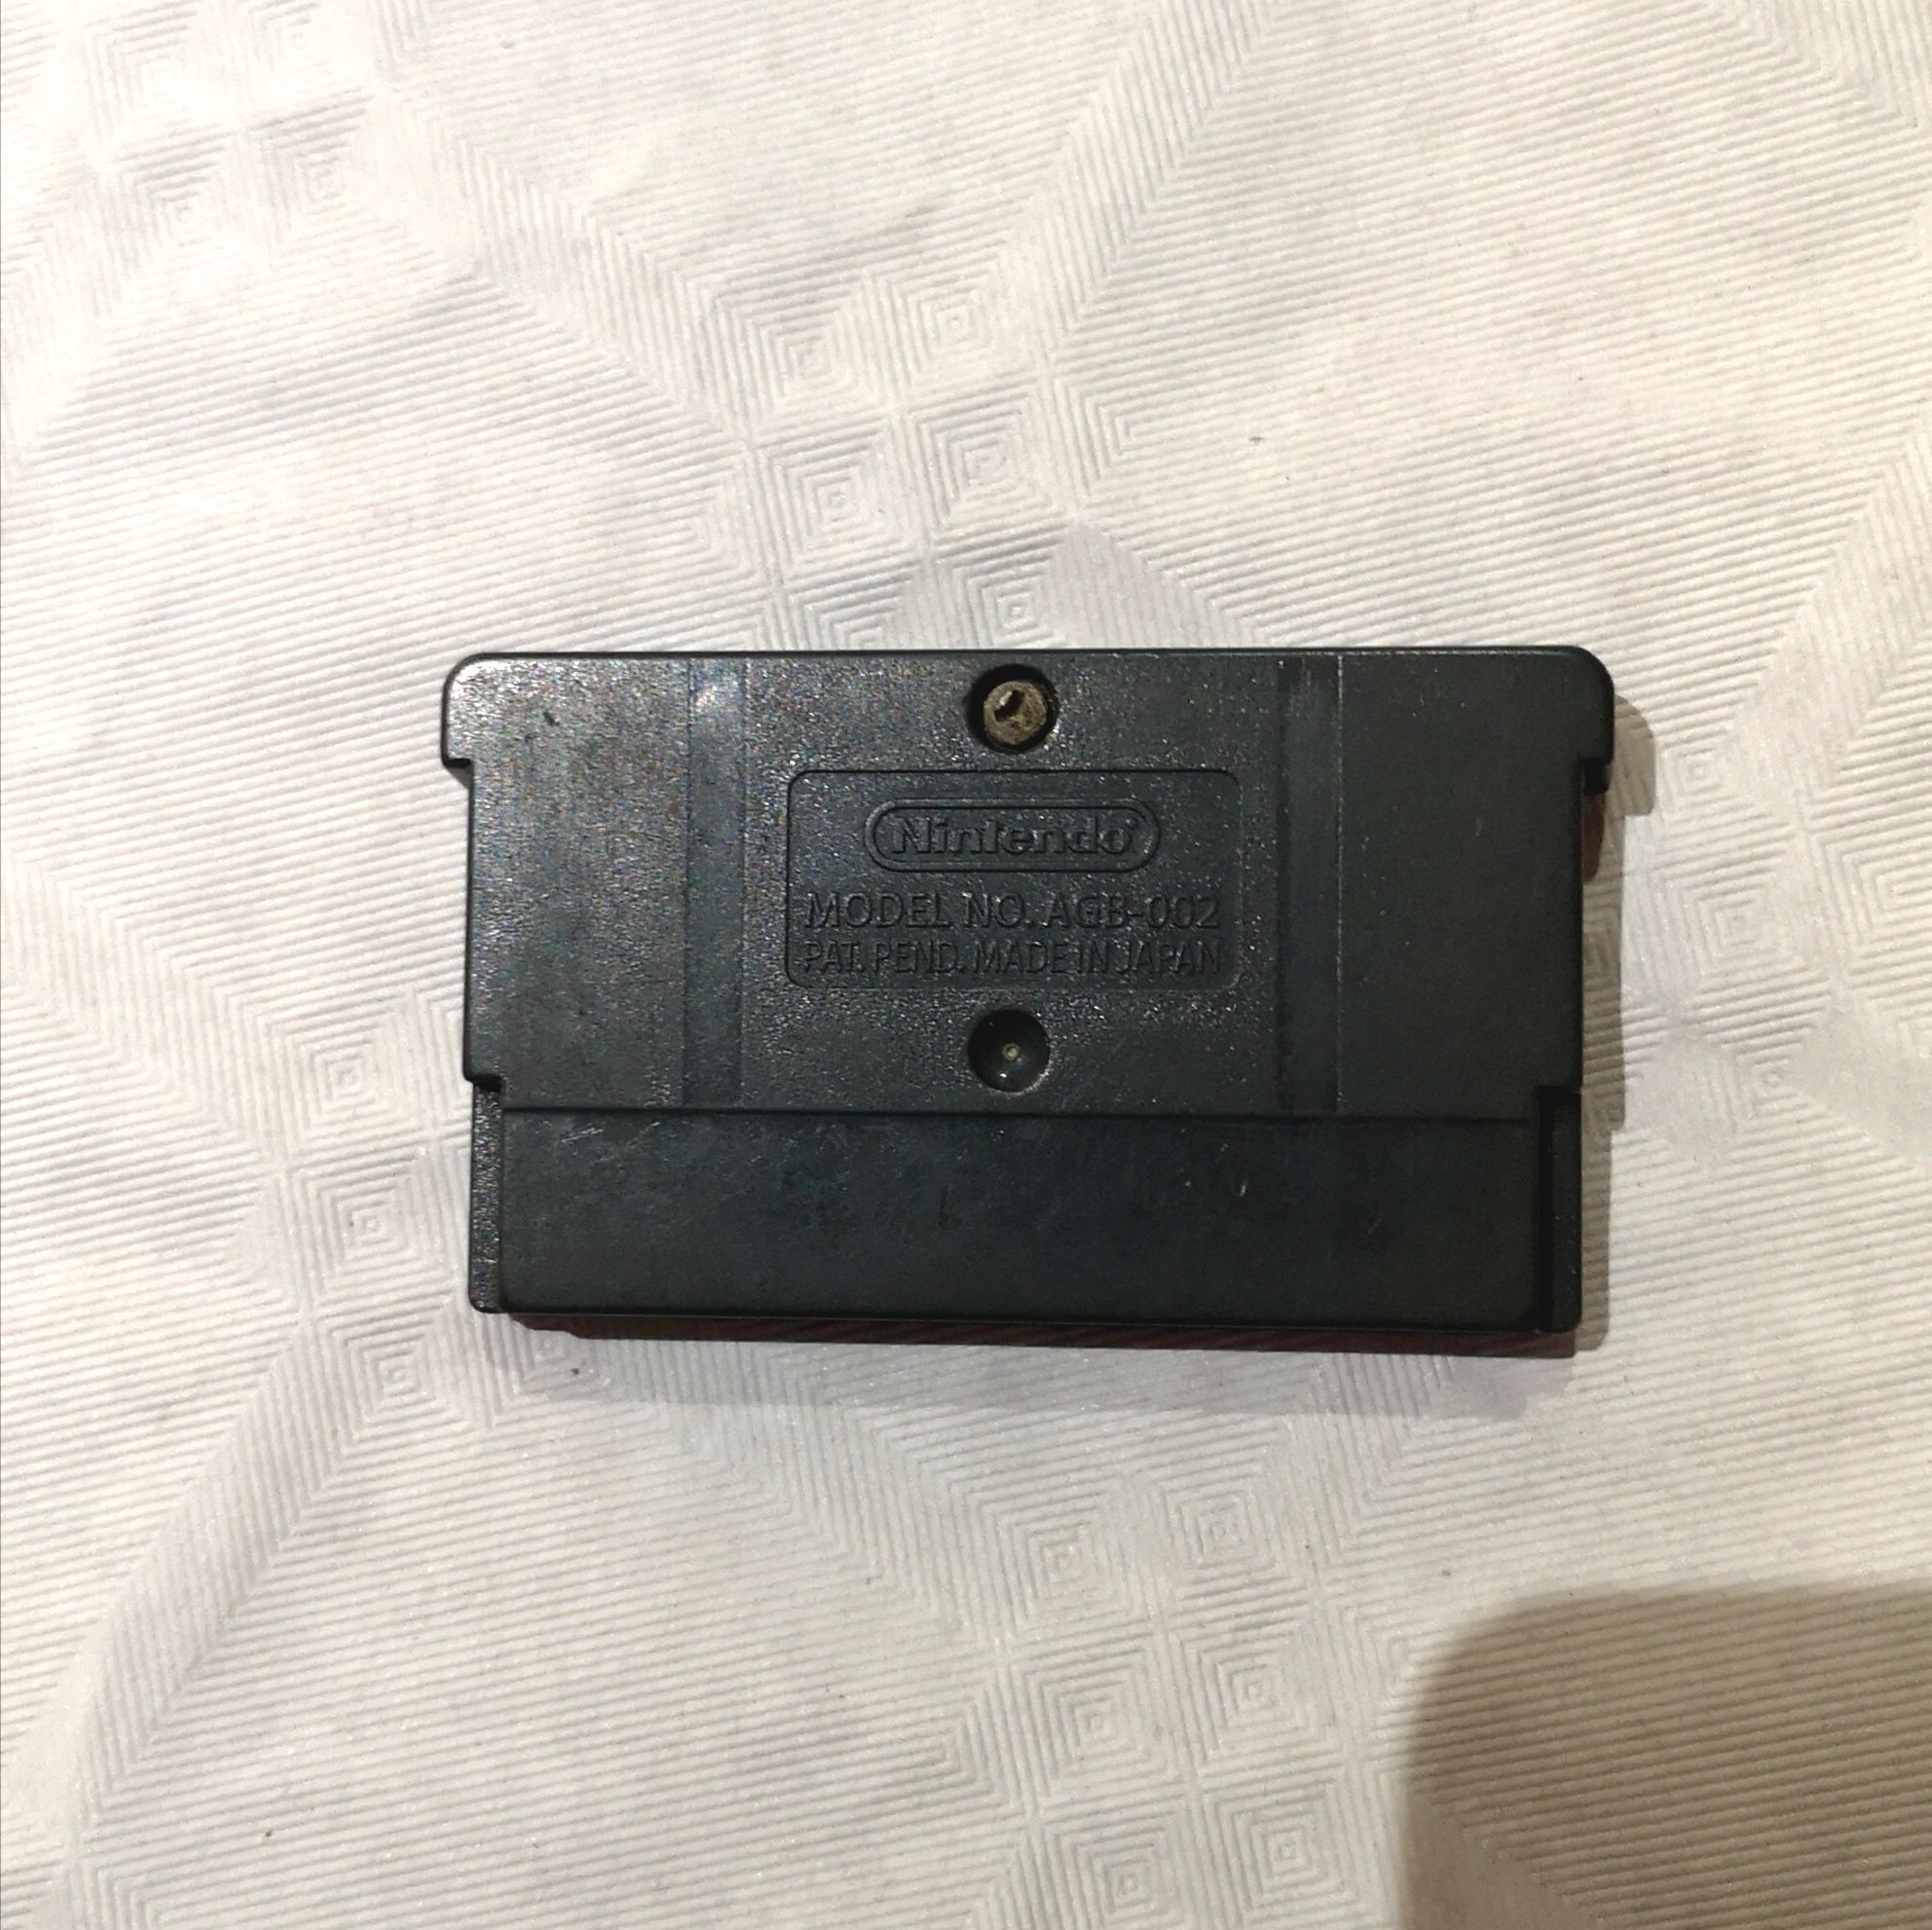 Beyblade VForce - Game Boy Advance